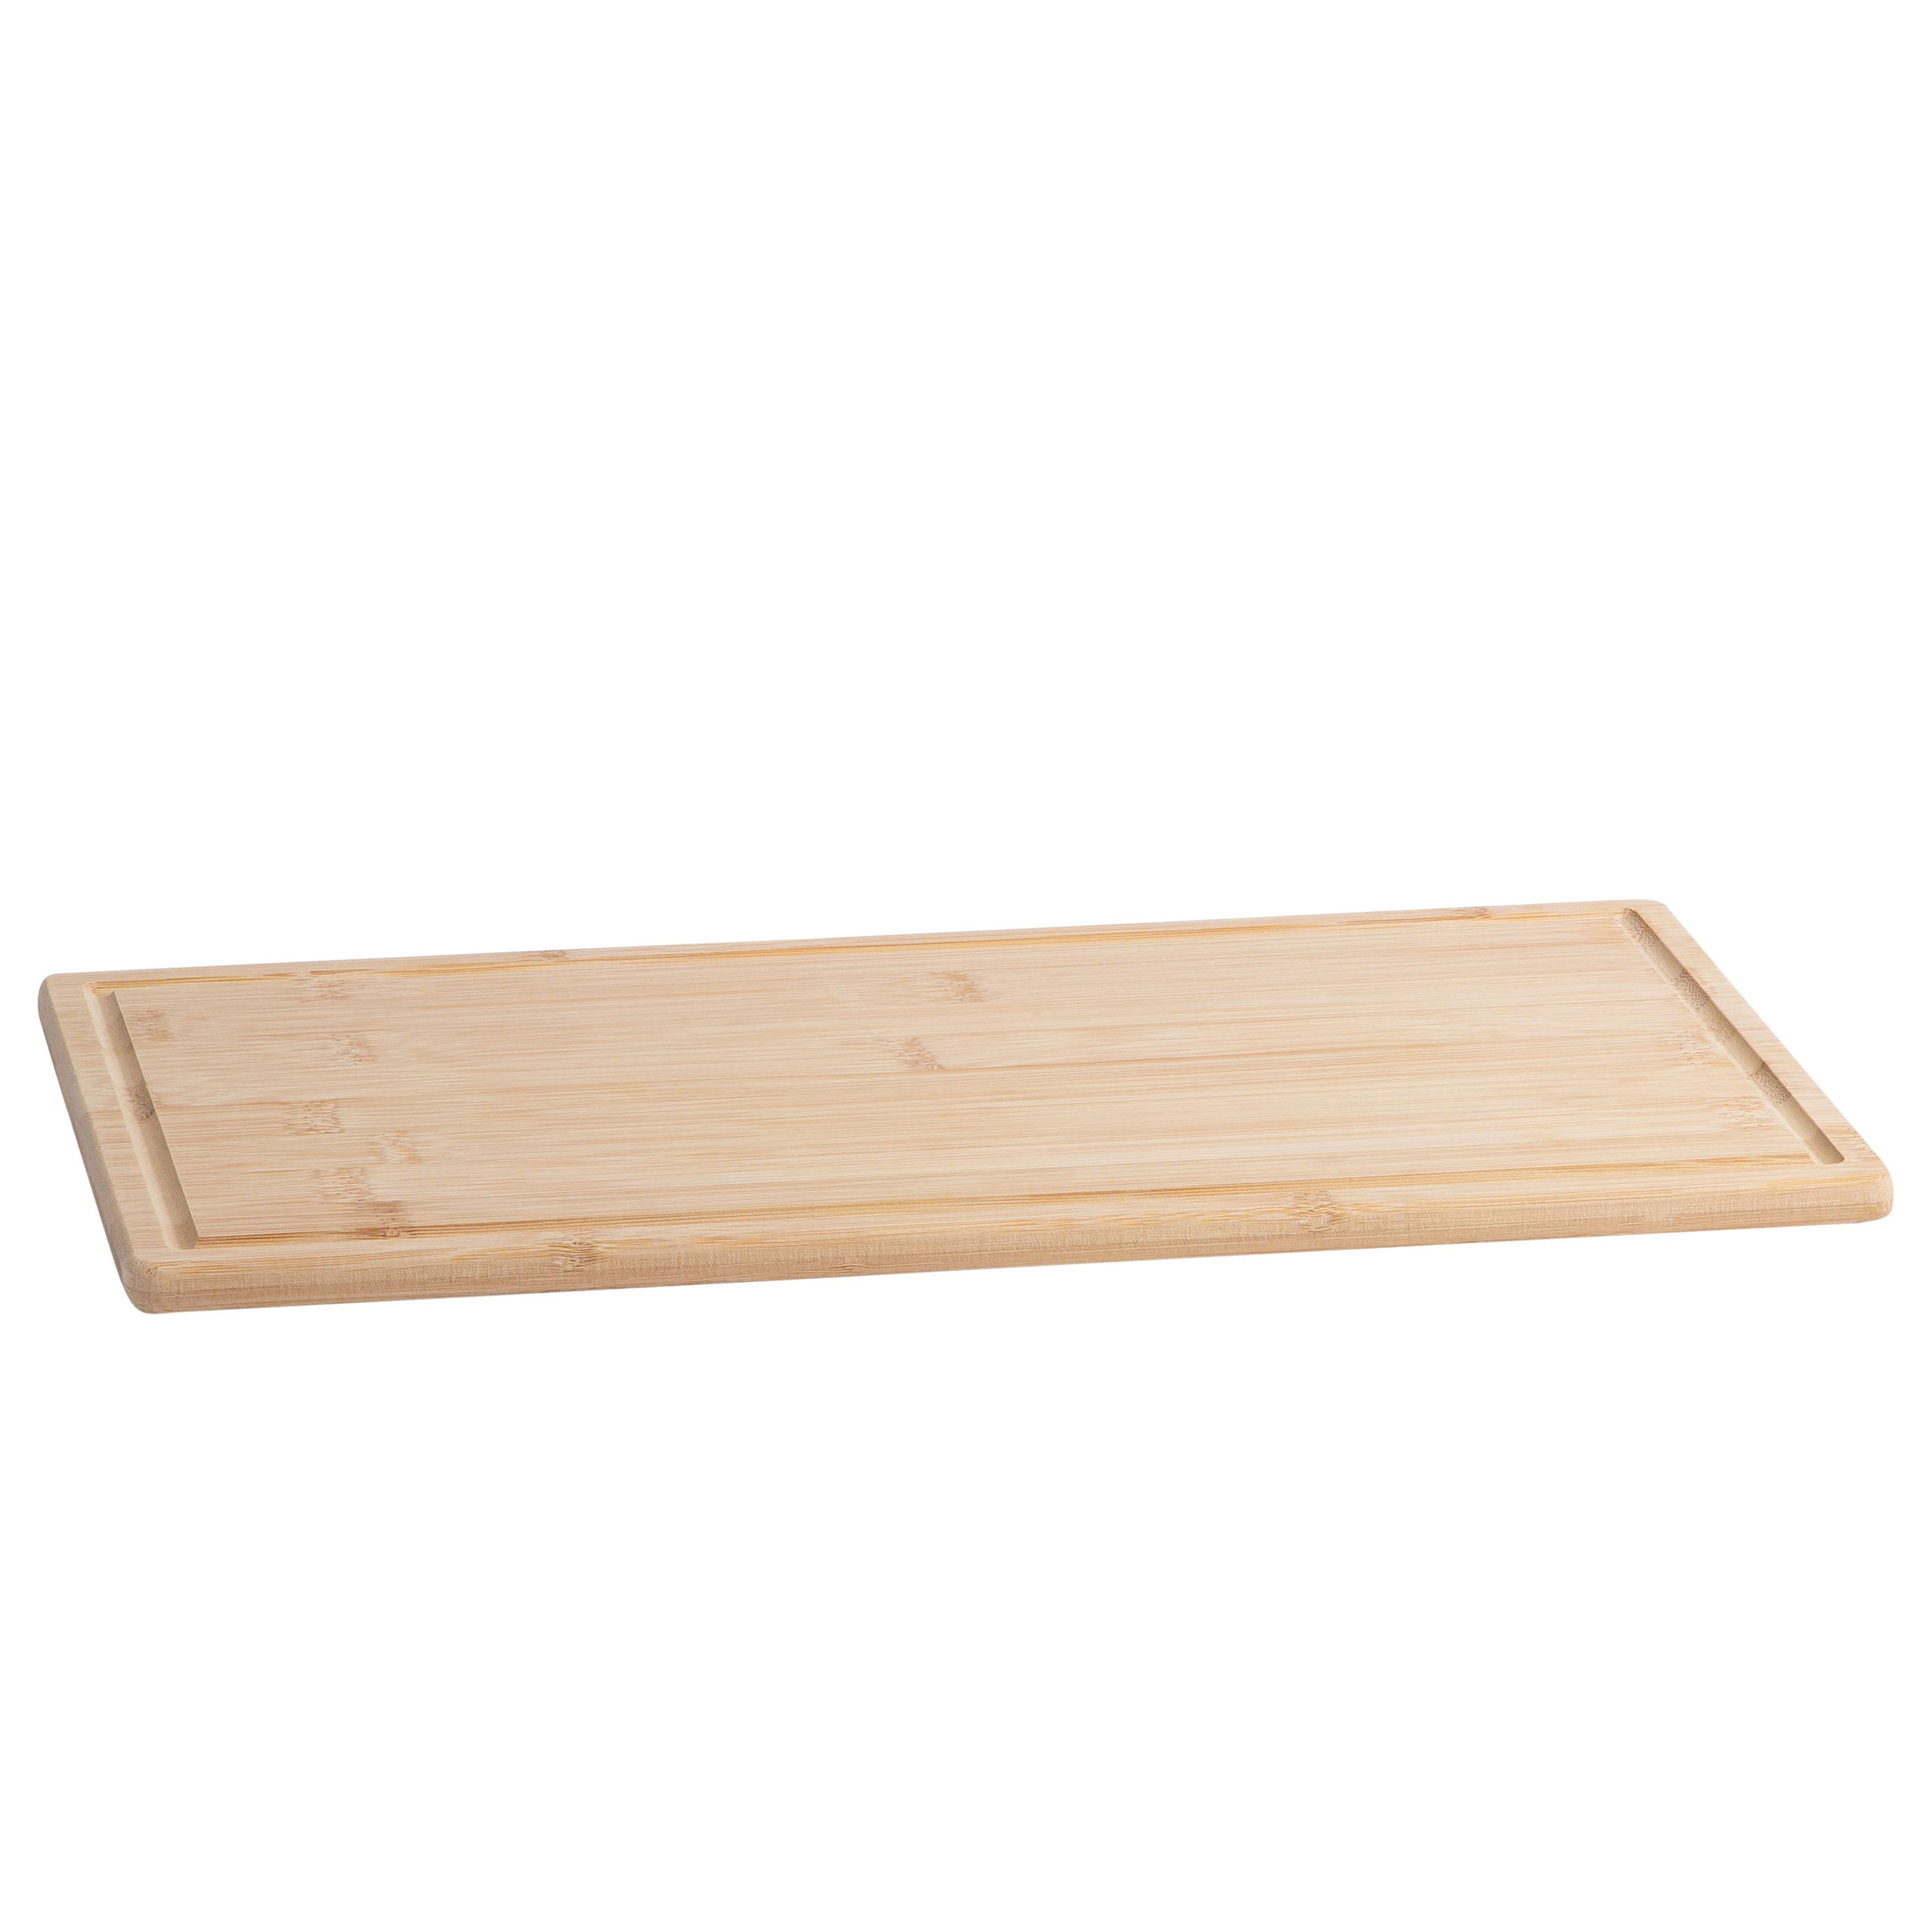 Bamboo Cutting Board Tray